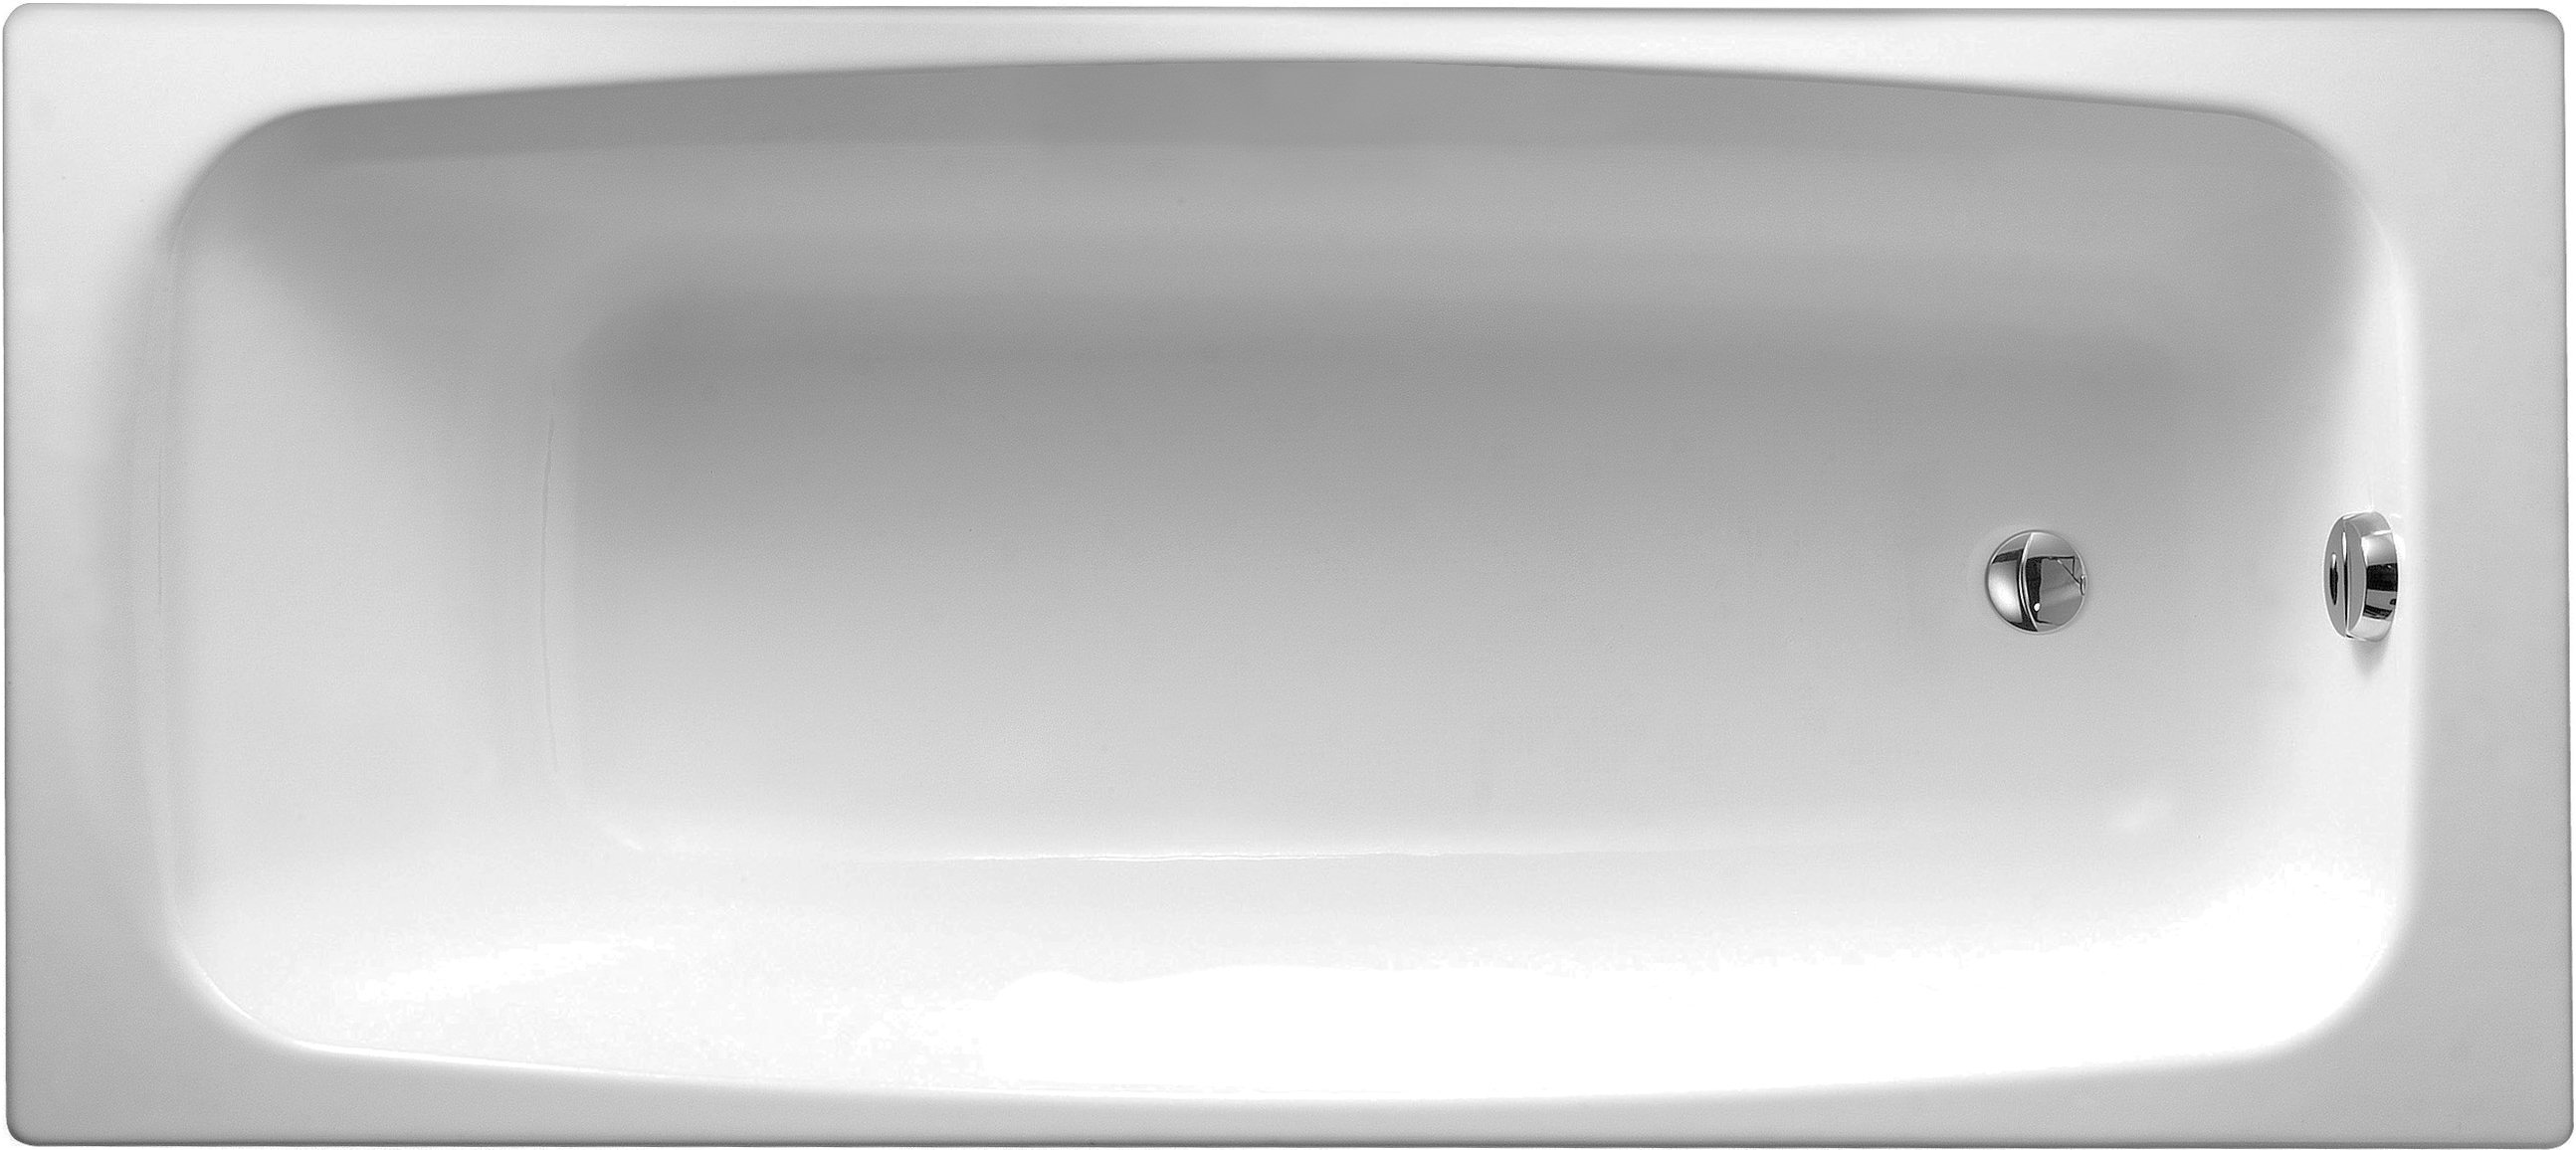 Купить Чугунная ванна Jacob Delafon Diapason 170x75 см (E2937-00), белый, чугун